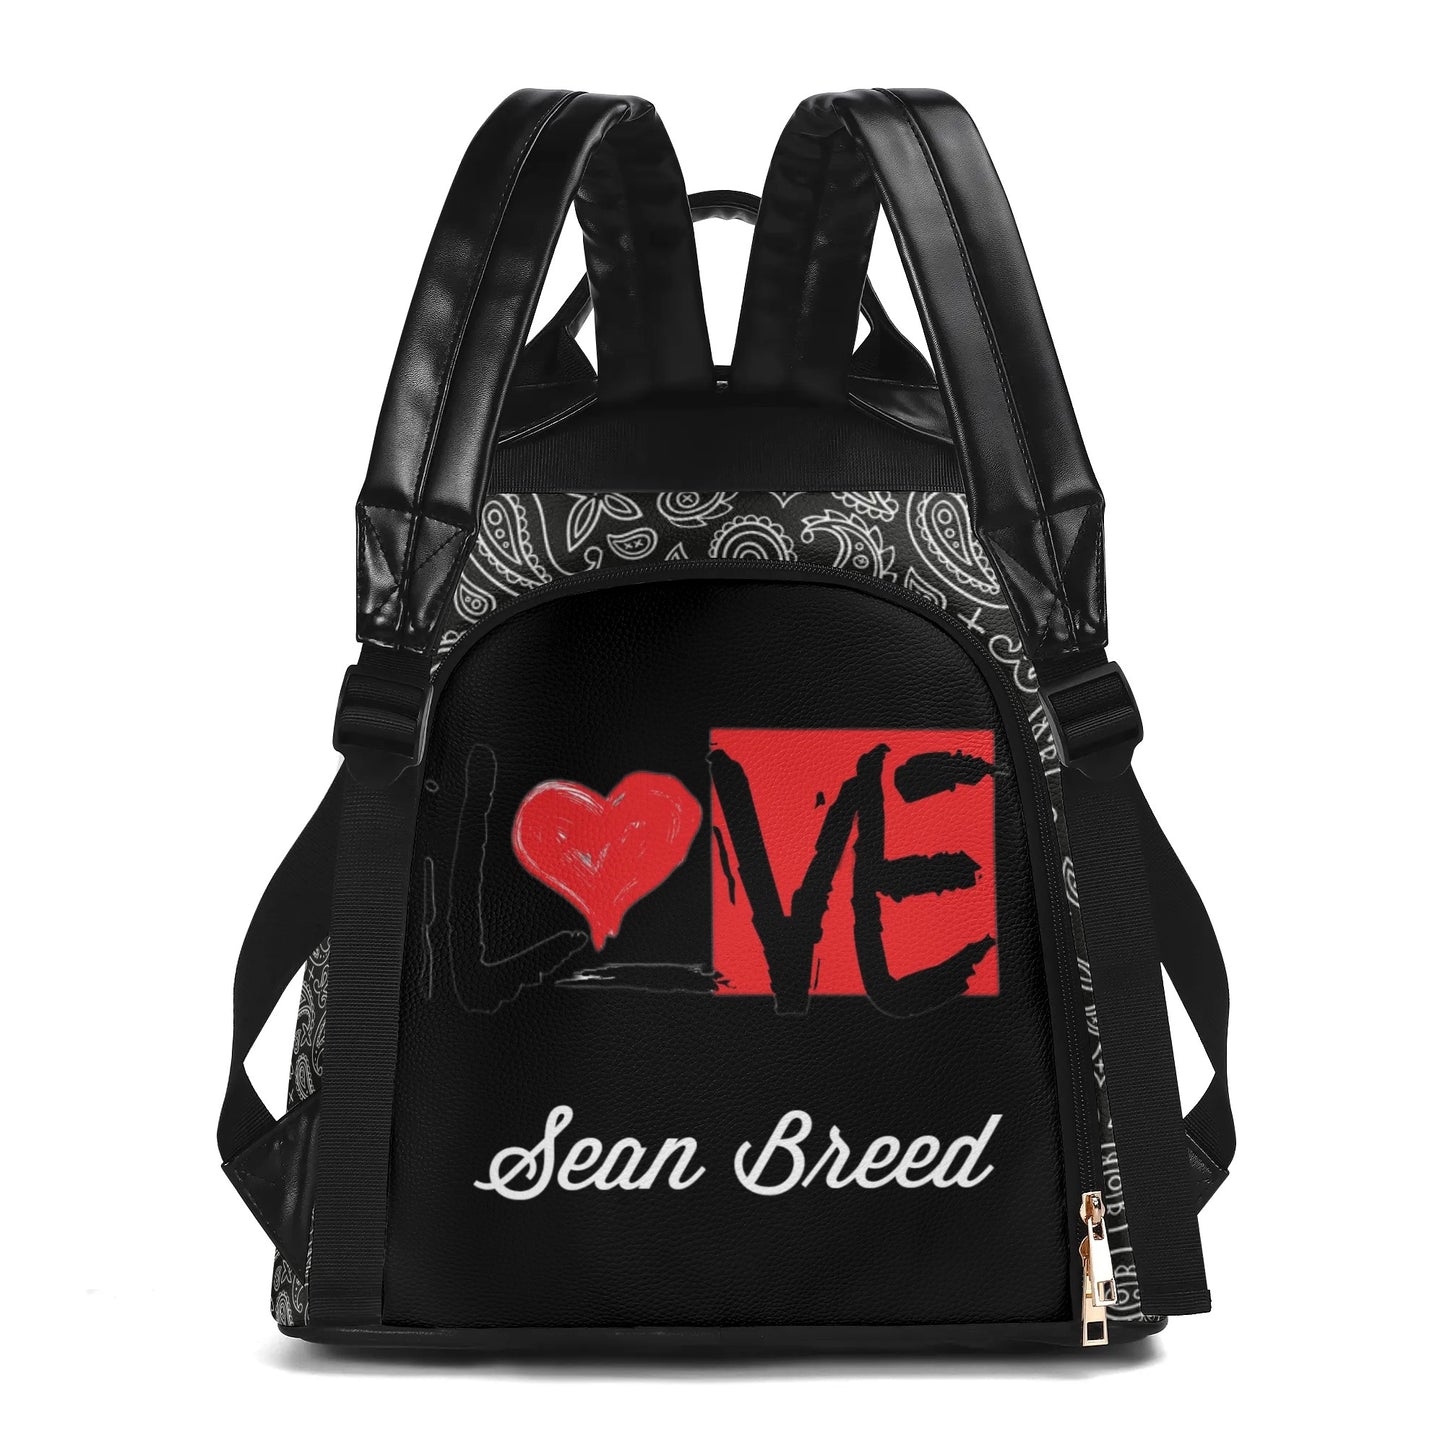 Sean Breed Love Travel PU Daypack Anti-theft Backpack